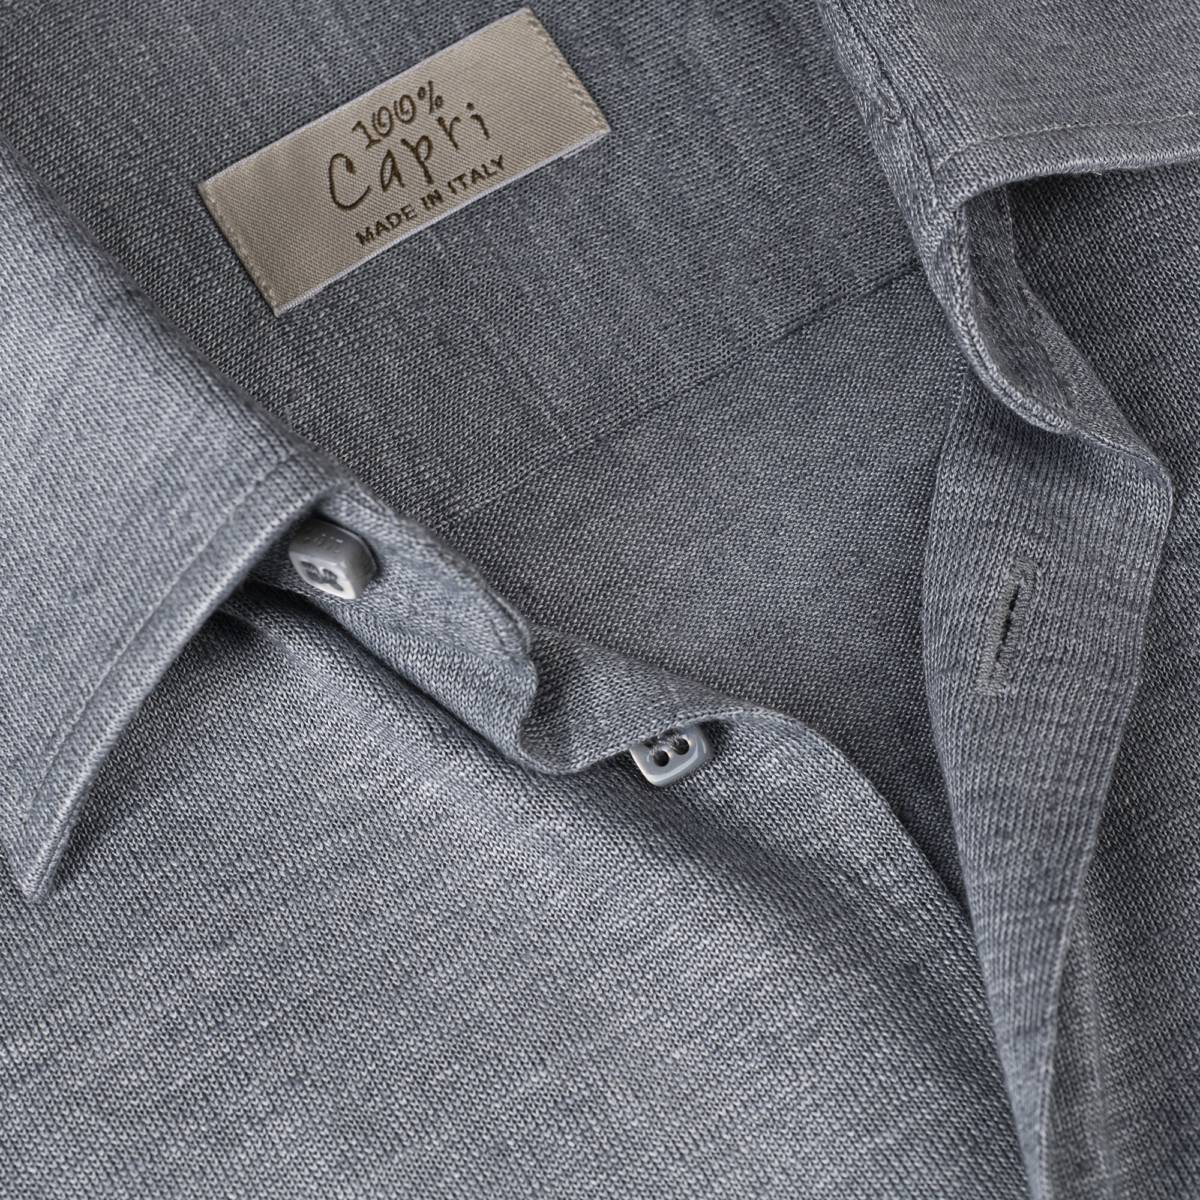 Camicia Short Sleeve dark grey details 100% Capri